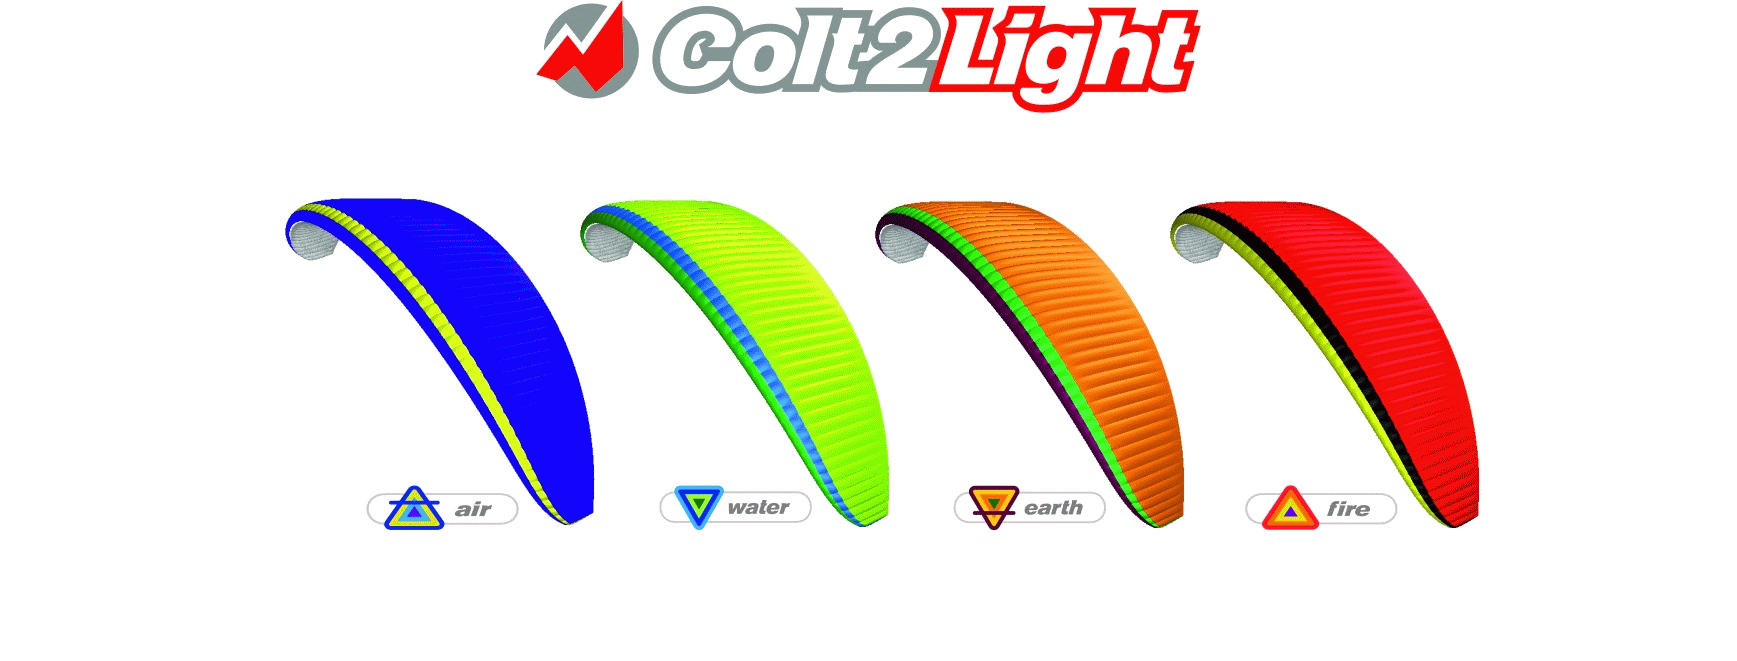 Colt 2 Light  Farben